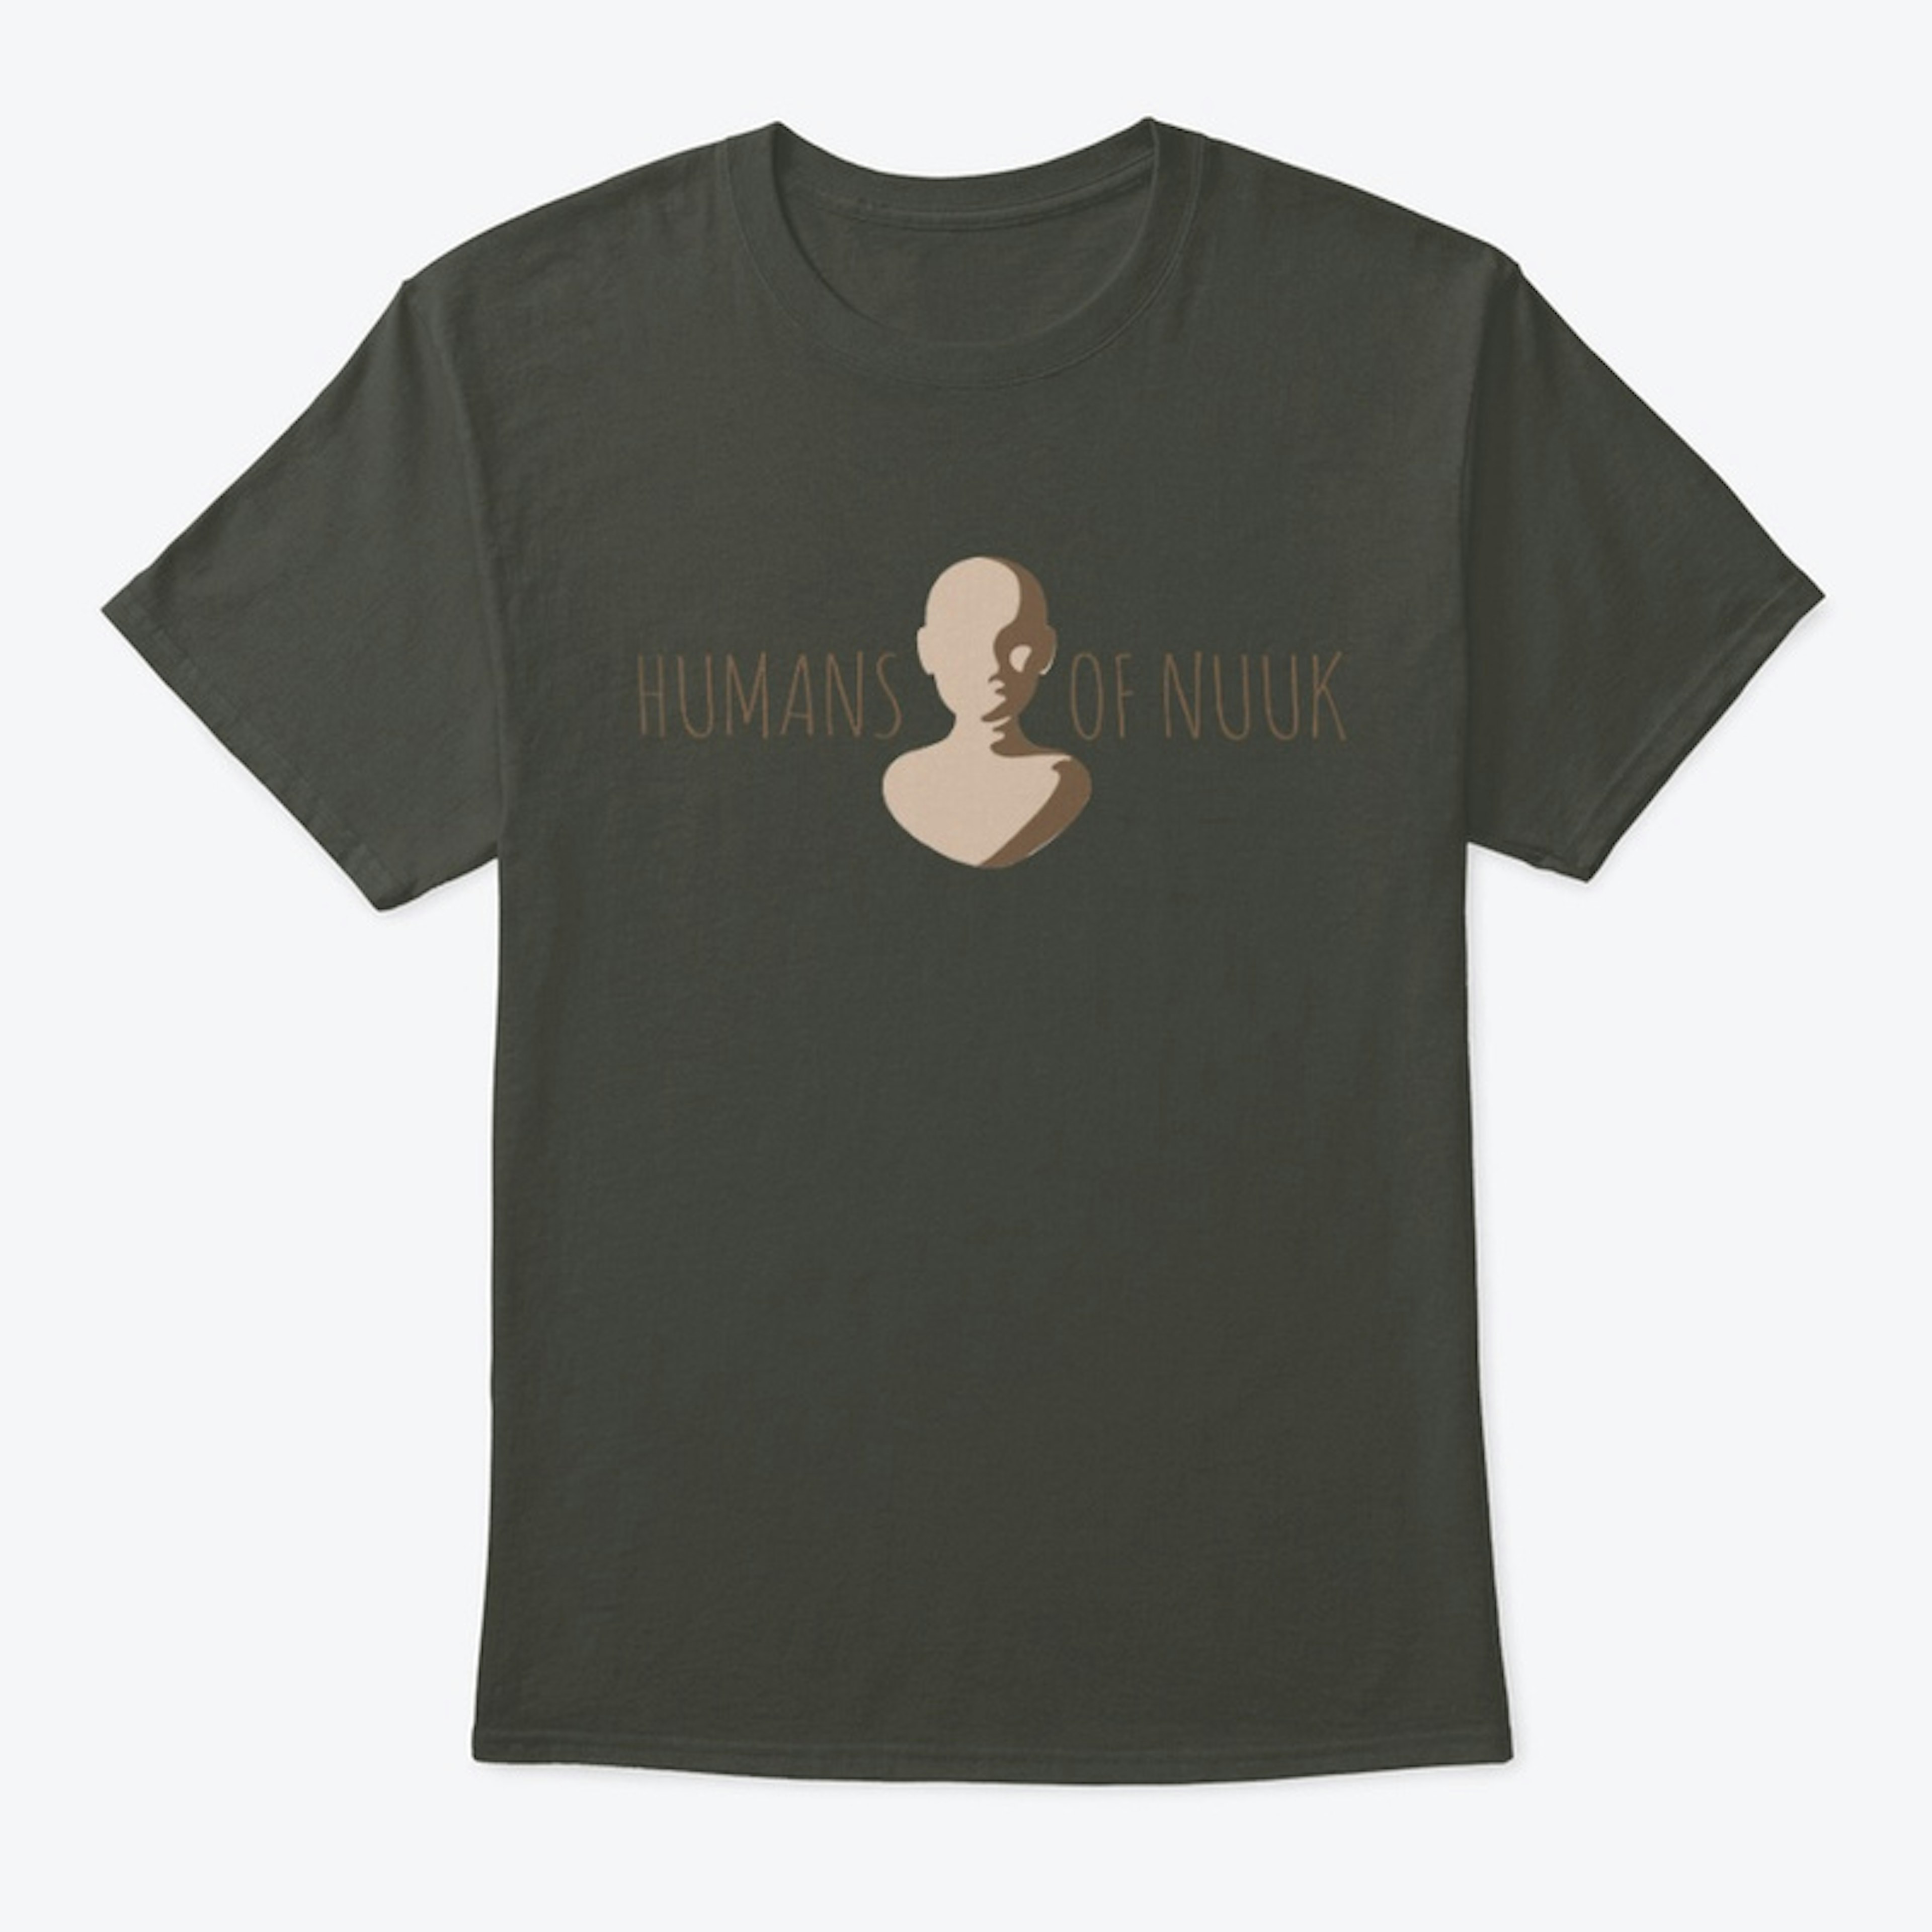 Humans of Nuuk T-shirt